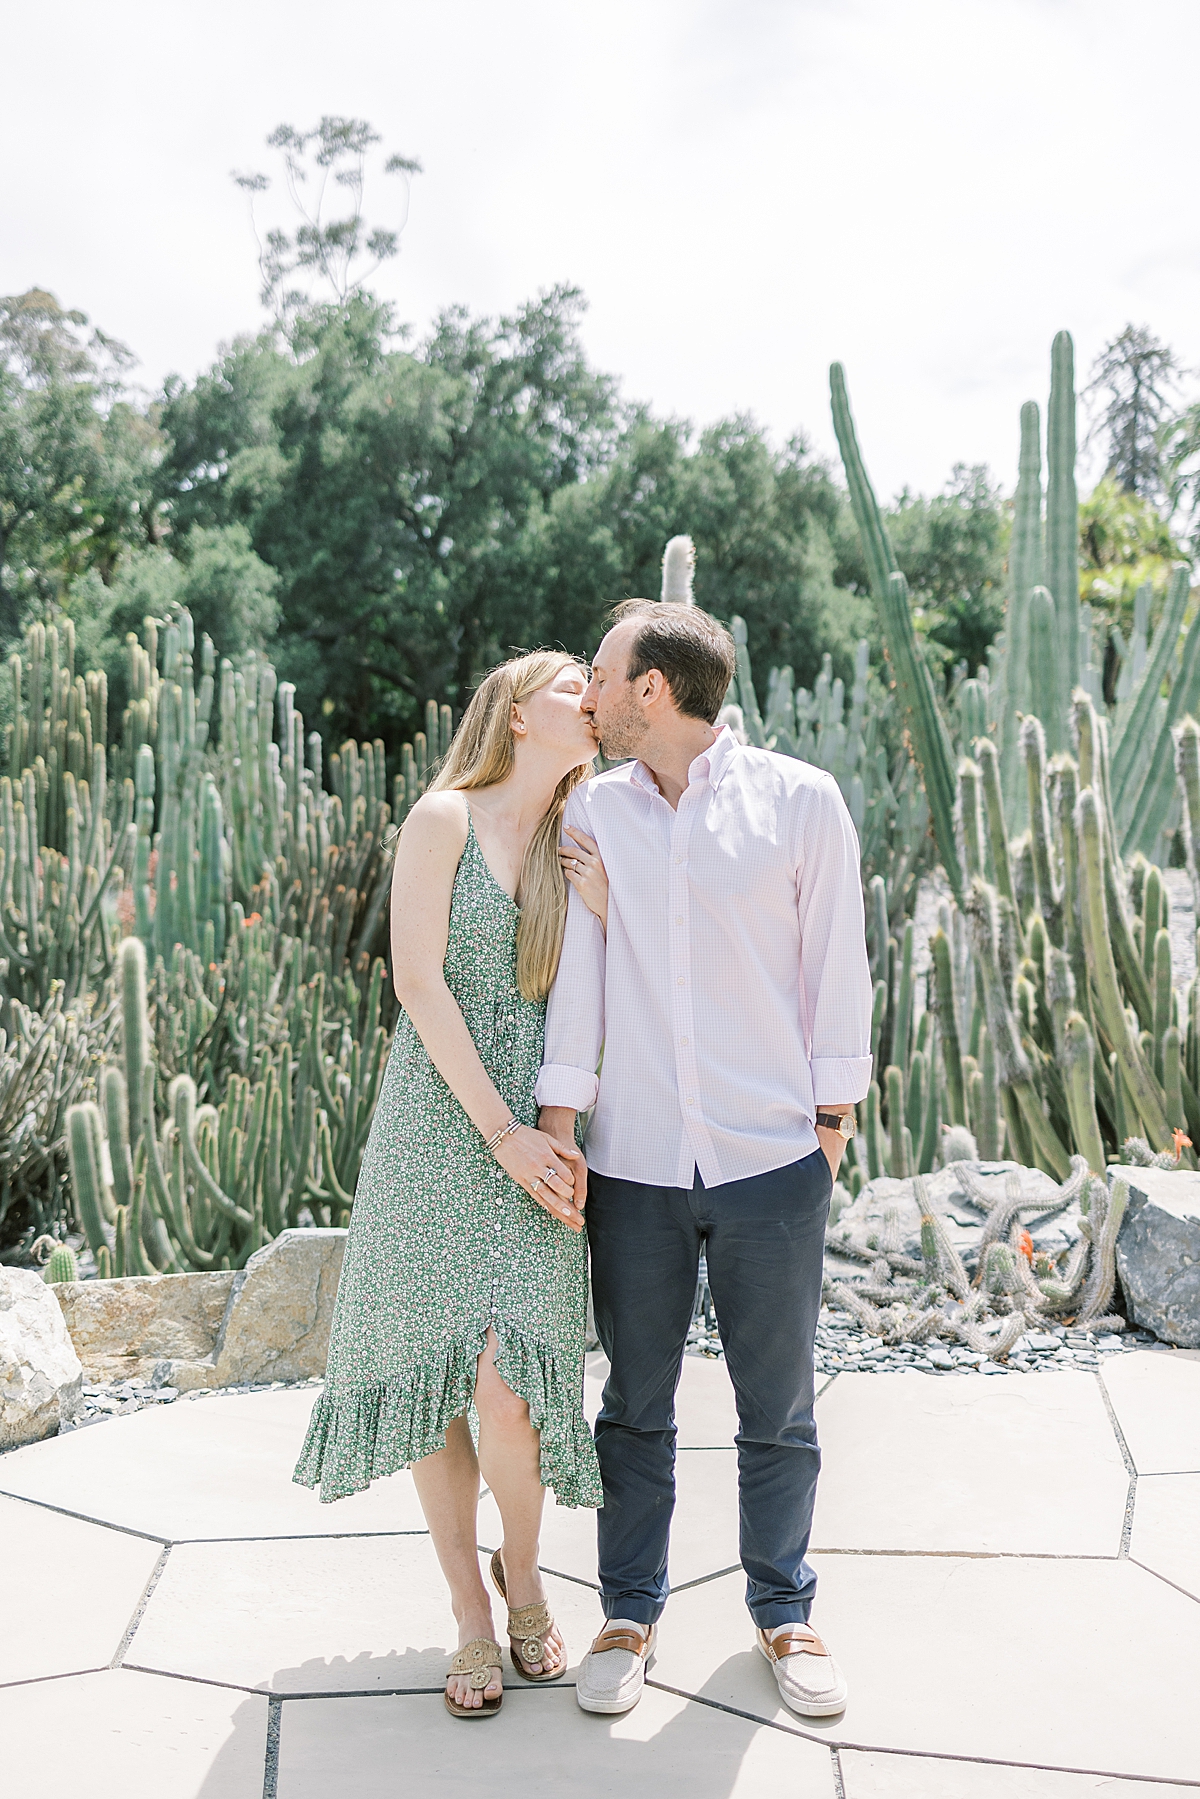 Justine & Alex sharing a kiss at their Montecito proposal at Lotusland